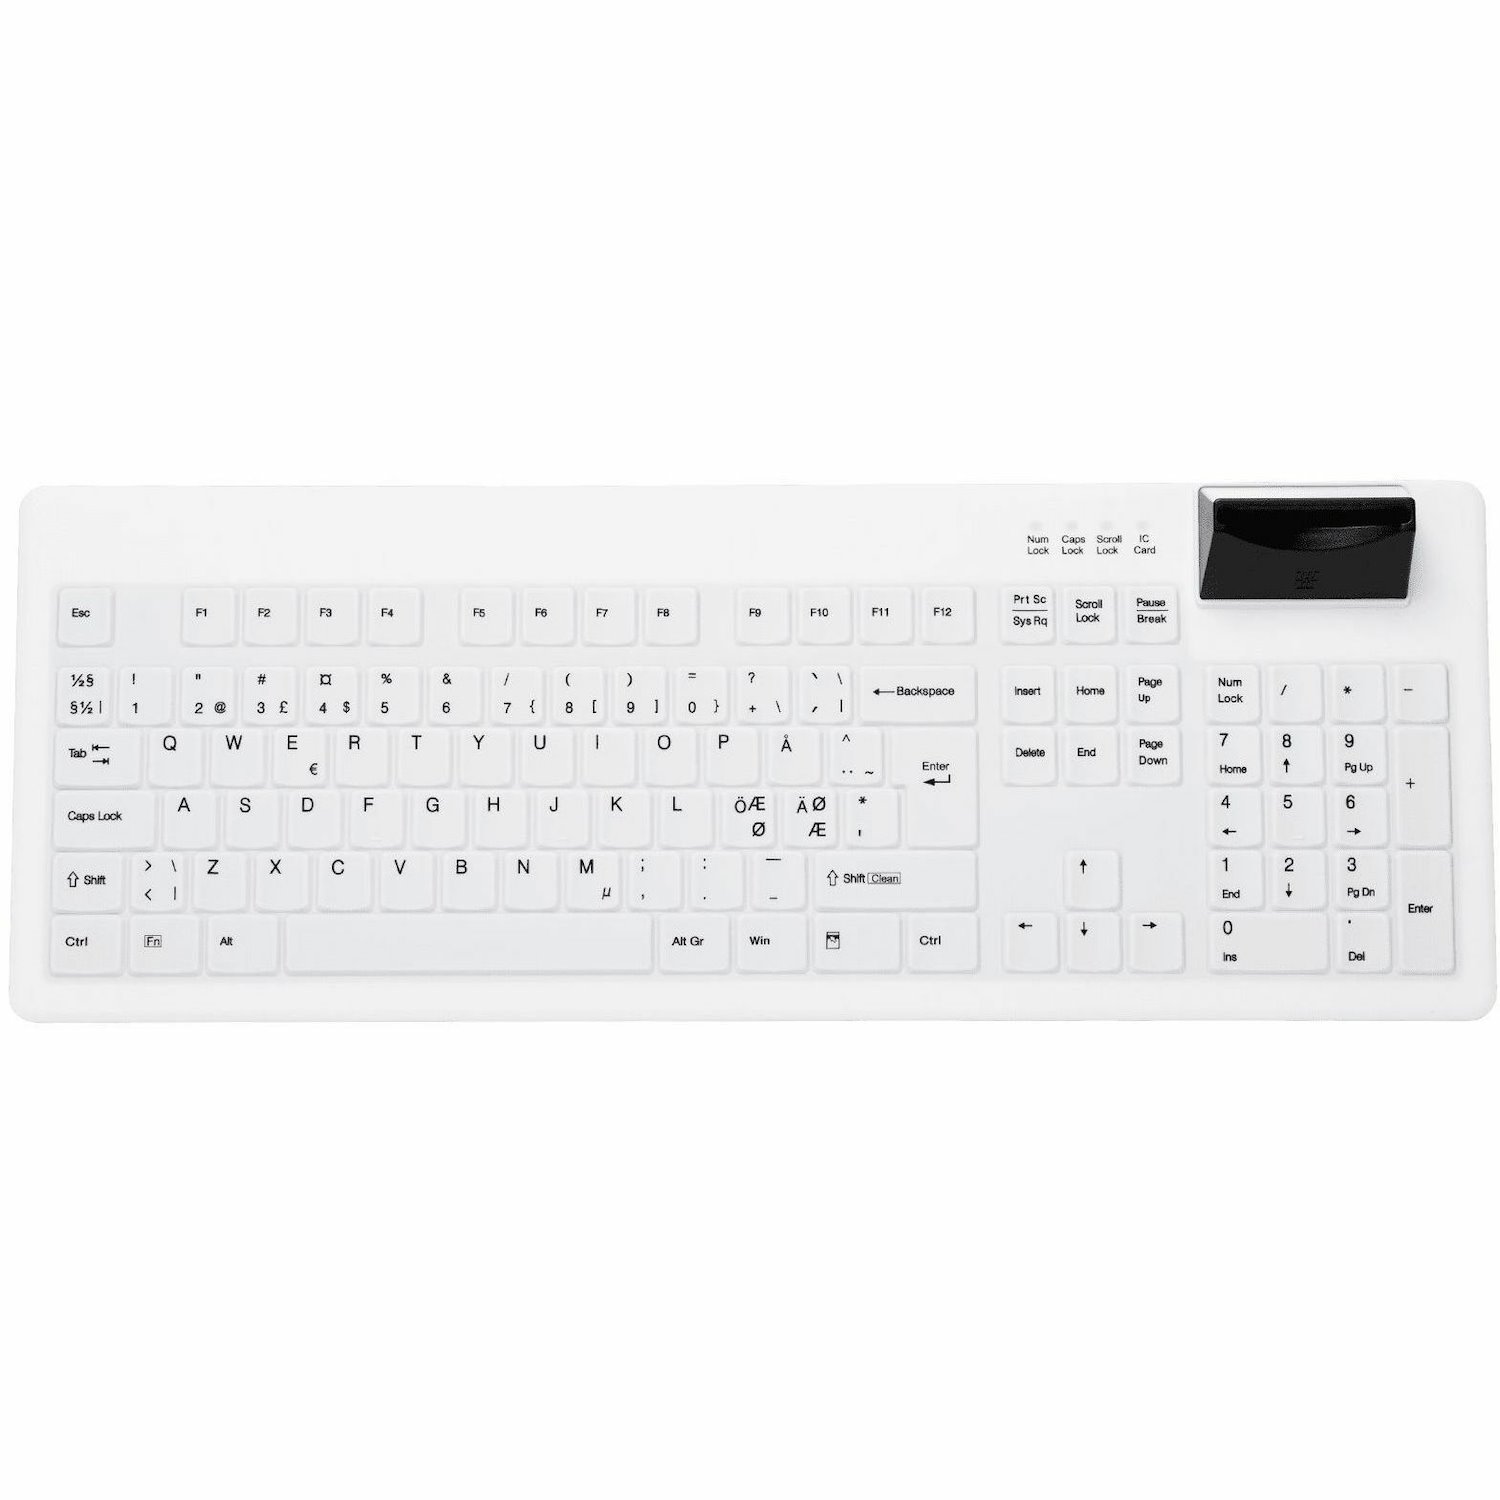 CHERRY Keyboard - Cable Connectivity - USB 1.1 Interface - English (UK) - Black, White